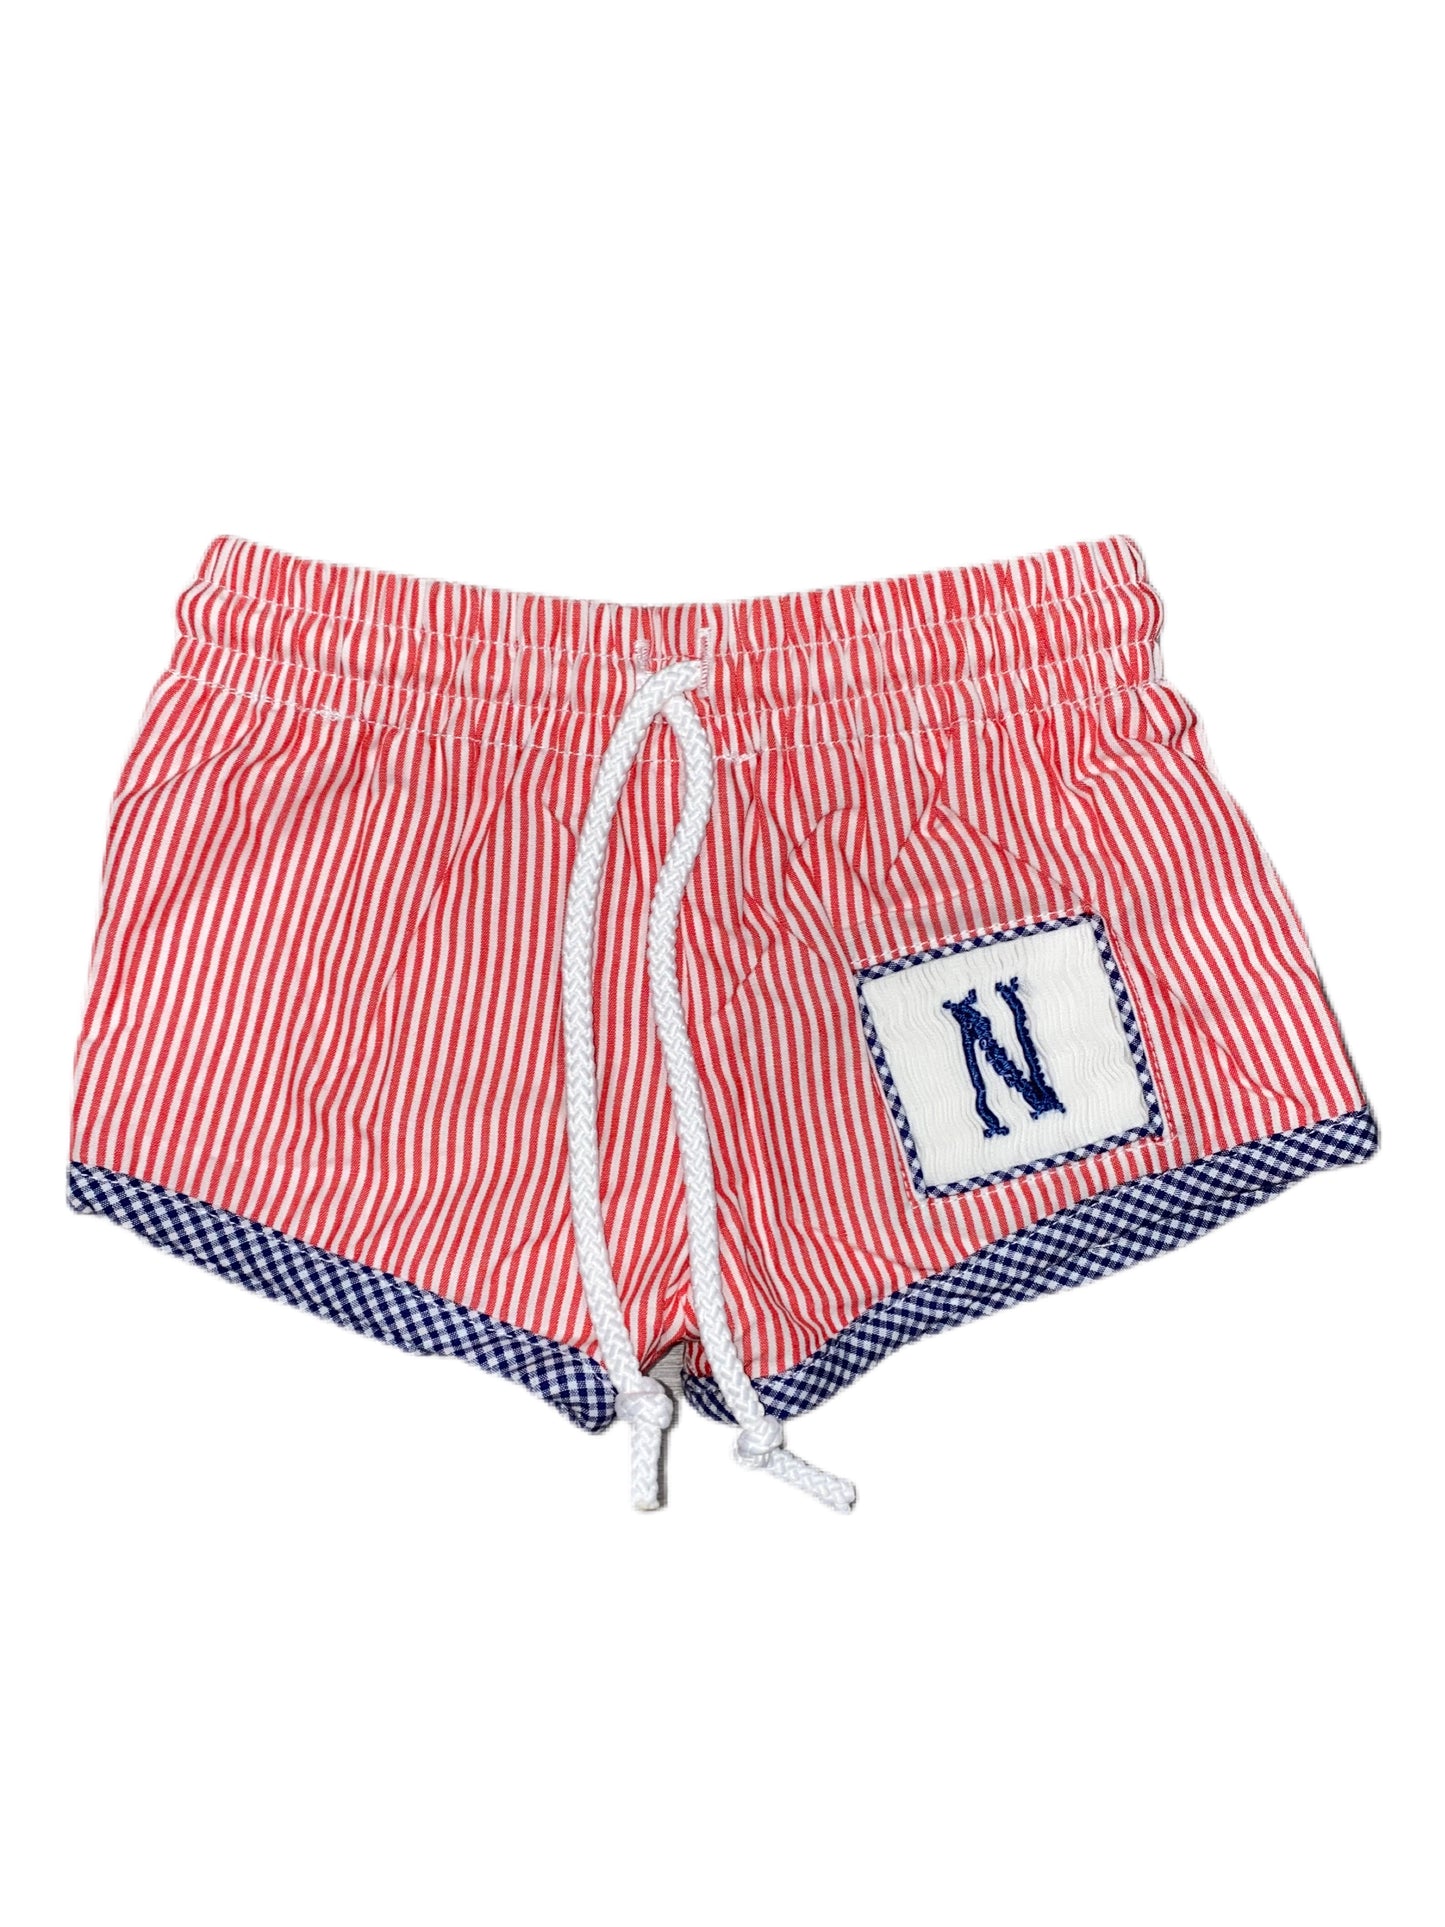 RTS: Boys Patriotic Swim Collection- Name Smock Initial Super Shortie Swim Shorts “N”